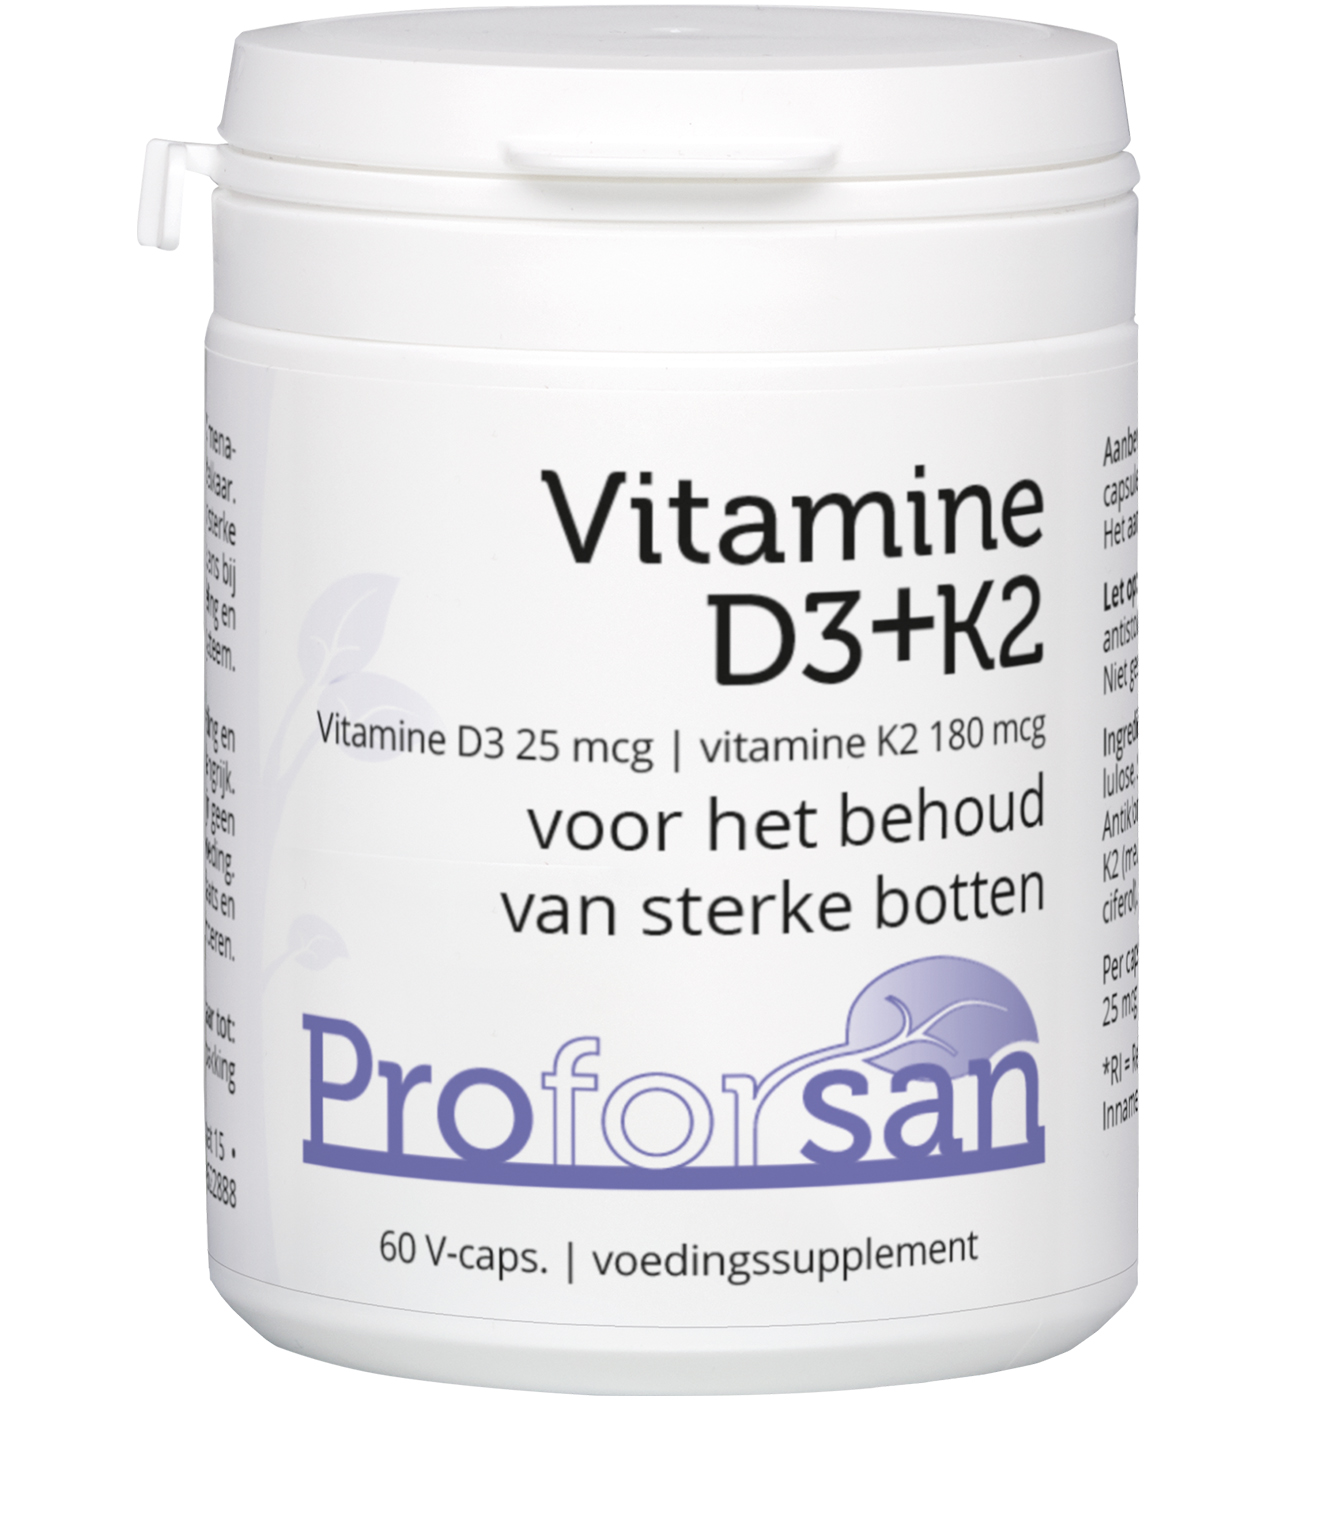 Proforsan Vitamine D3+K2 - 60 V-capsules